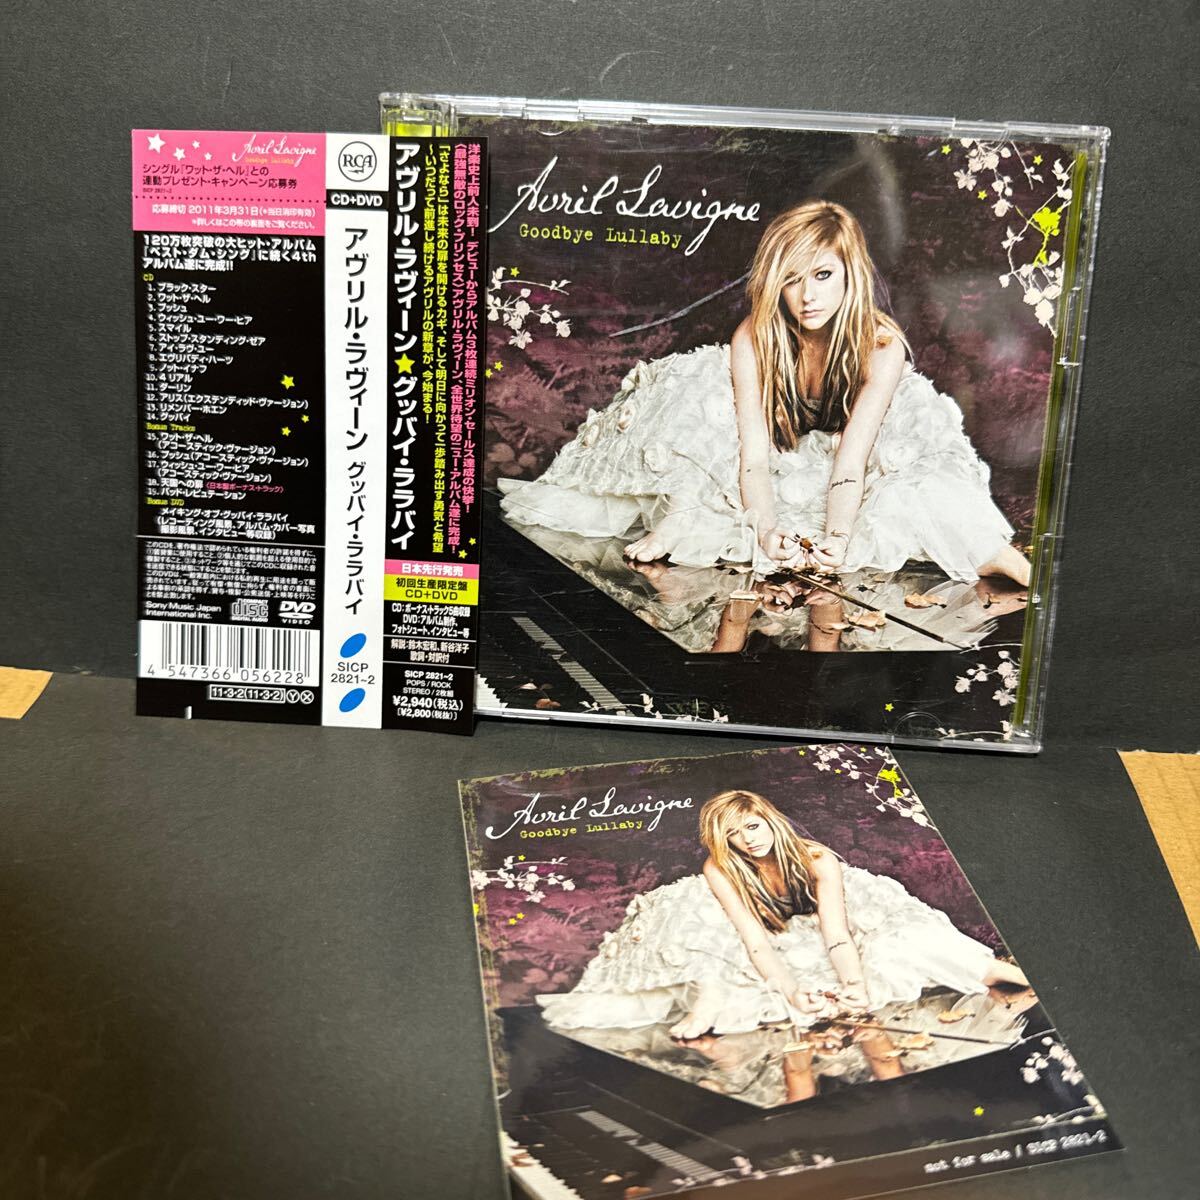 AVRILLAVIGNE 国内盤 CD DVD 「グッバイララバイ」ステッカー付き_画像1